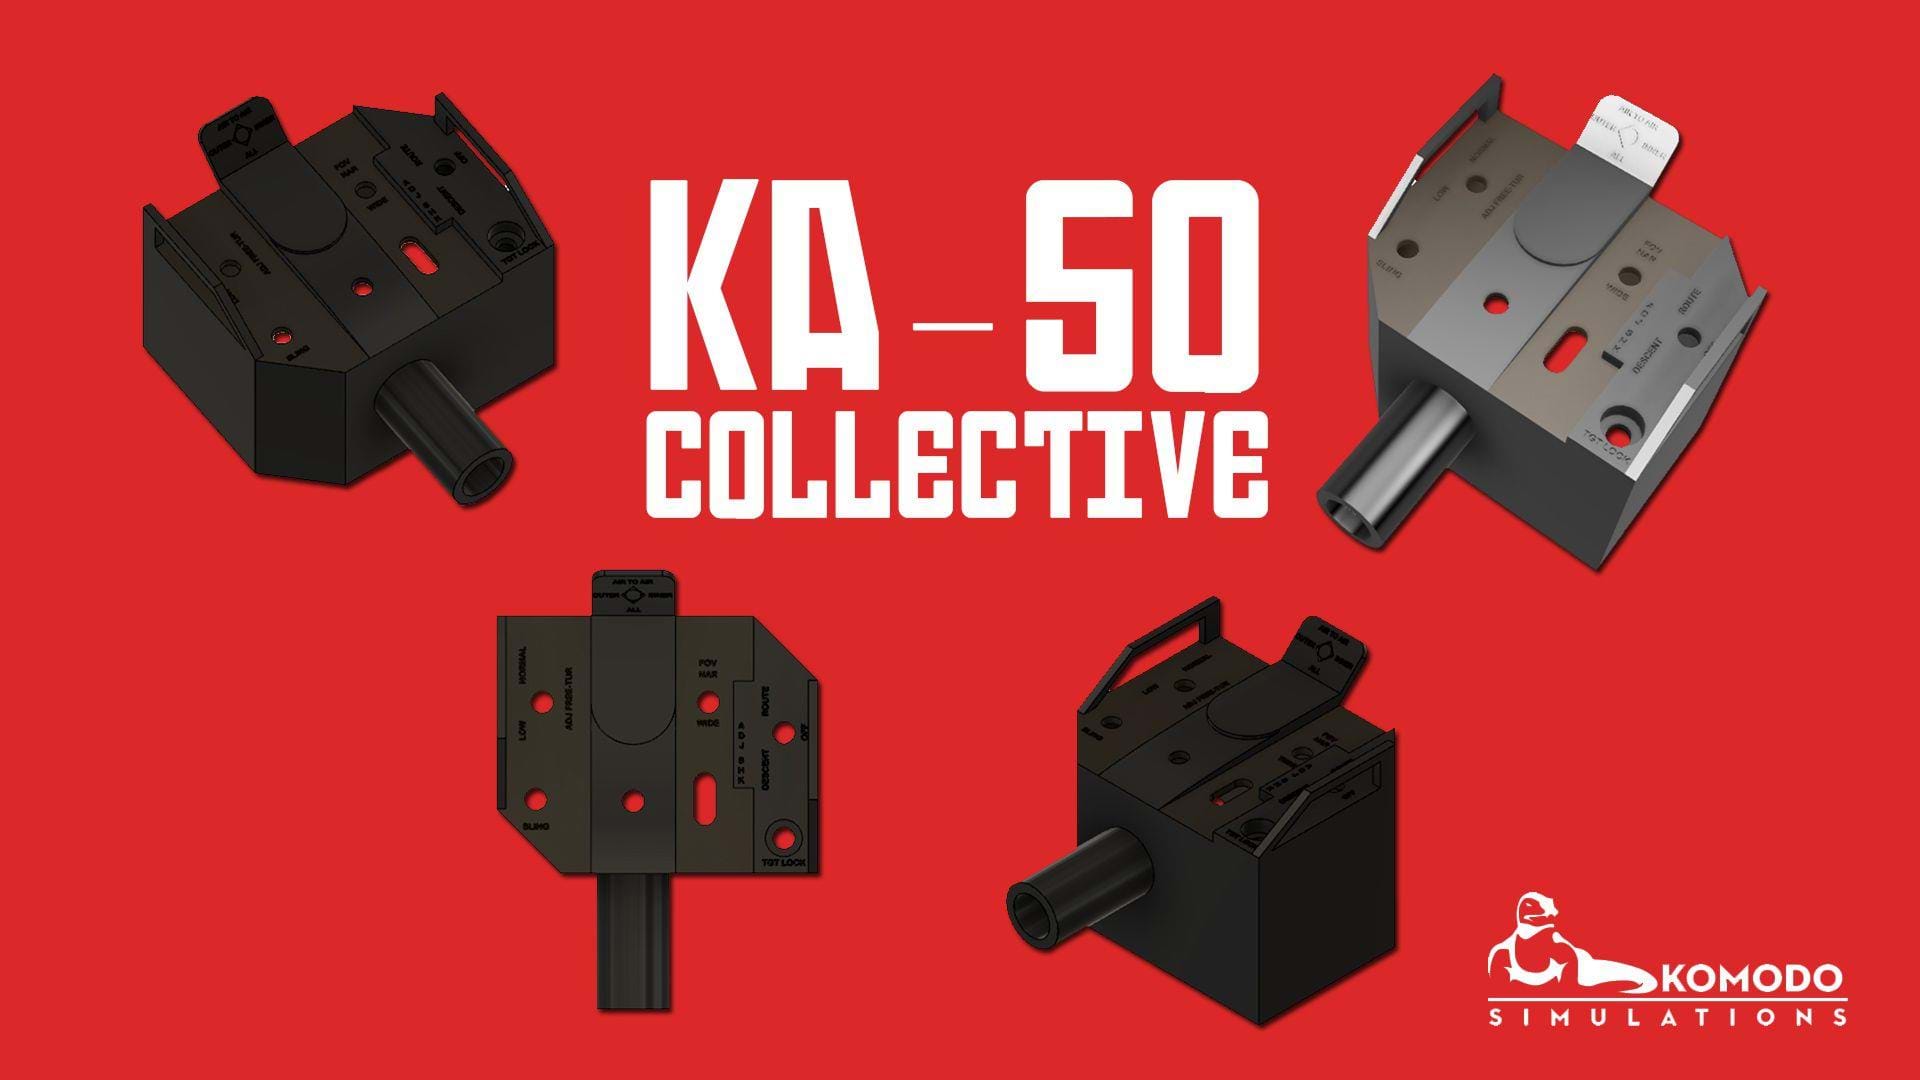 Komodo Simulations Ka-50 collective